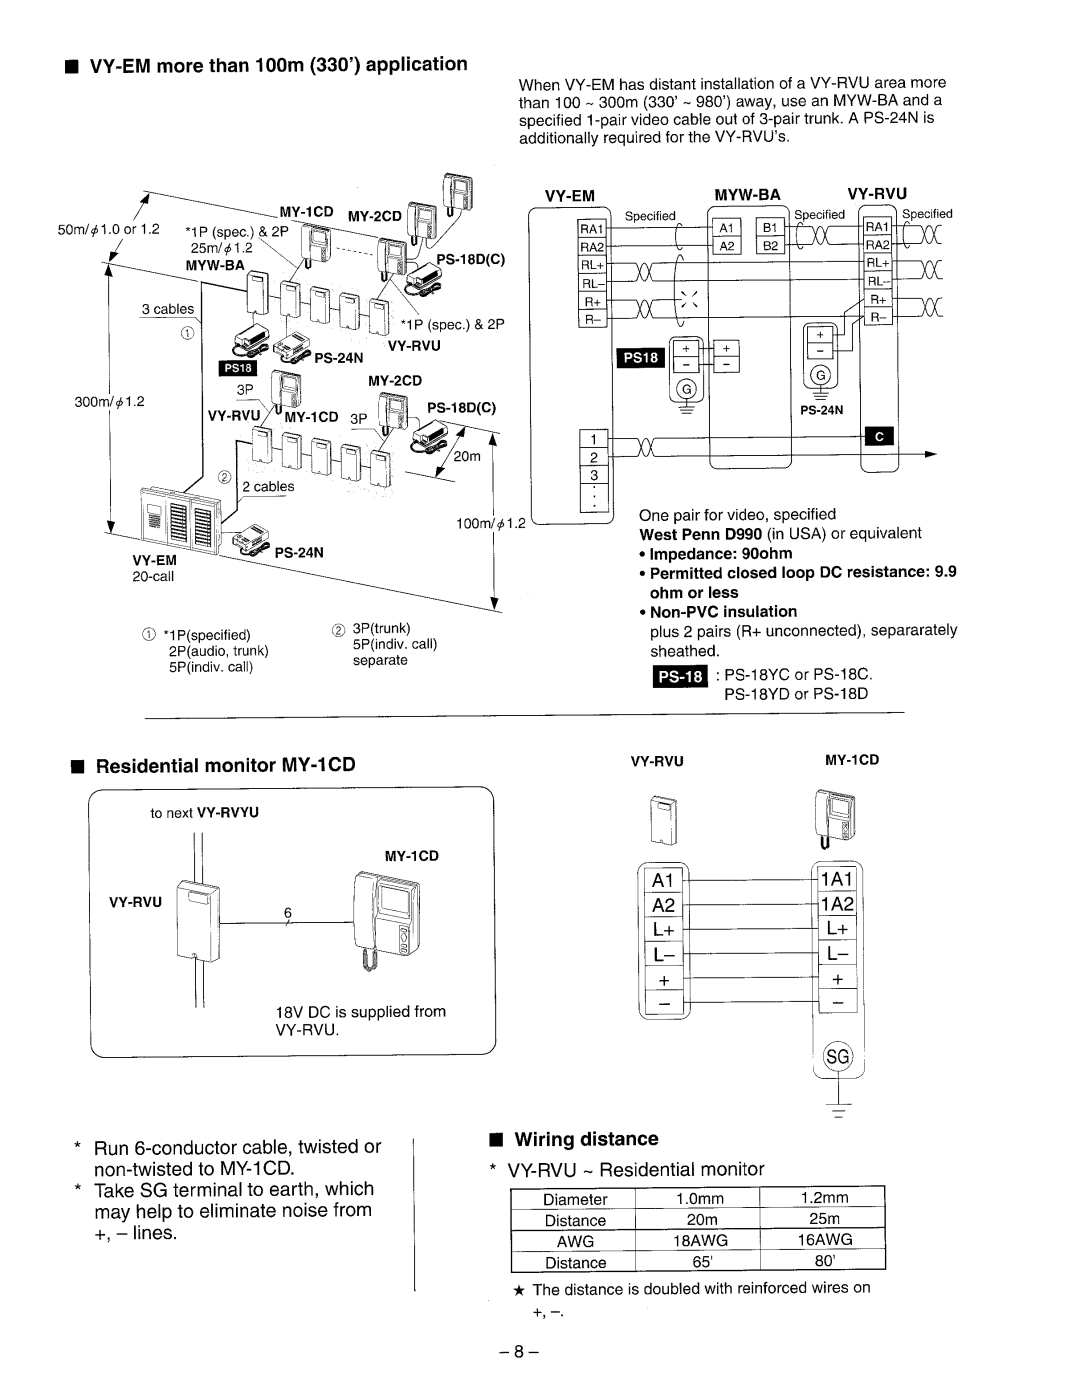 Aiphone VY-10EM, VY-5EM manual 